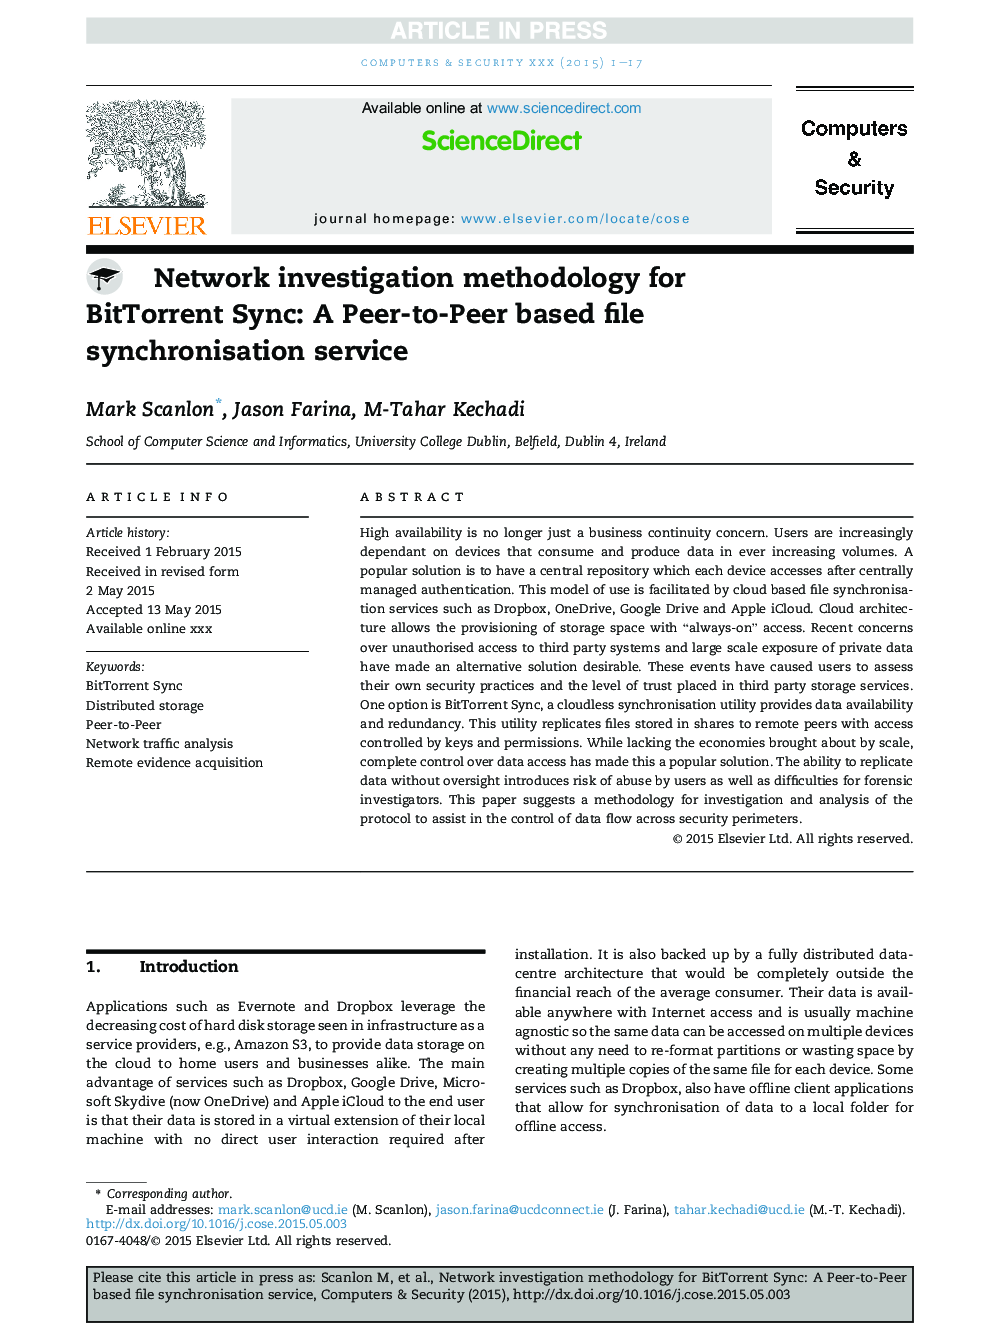 Network investigation methodology for BitTorrent Sync: A Peer-to-Peer based file synchronisation service